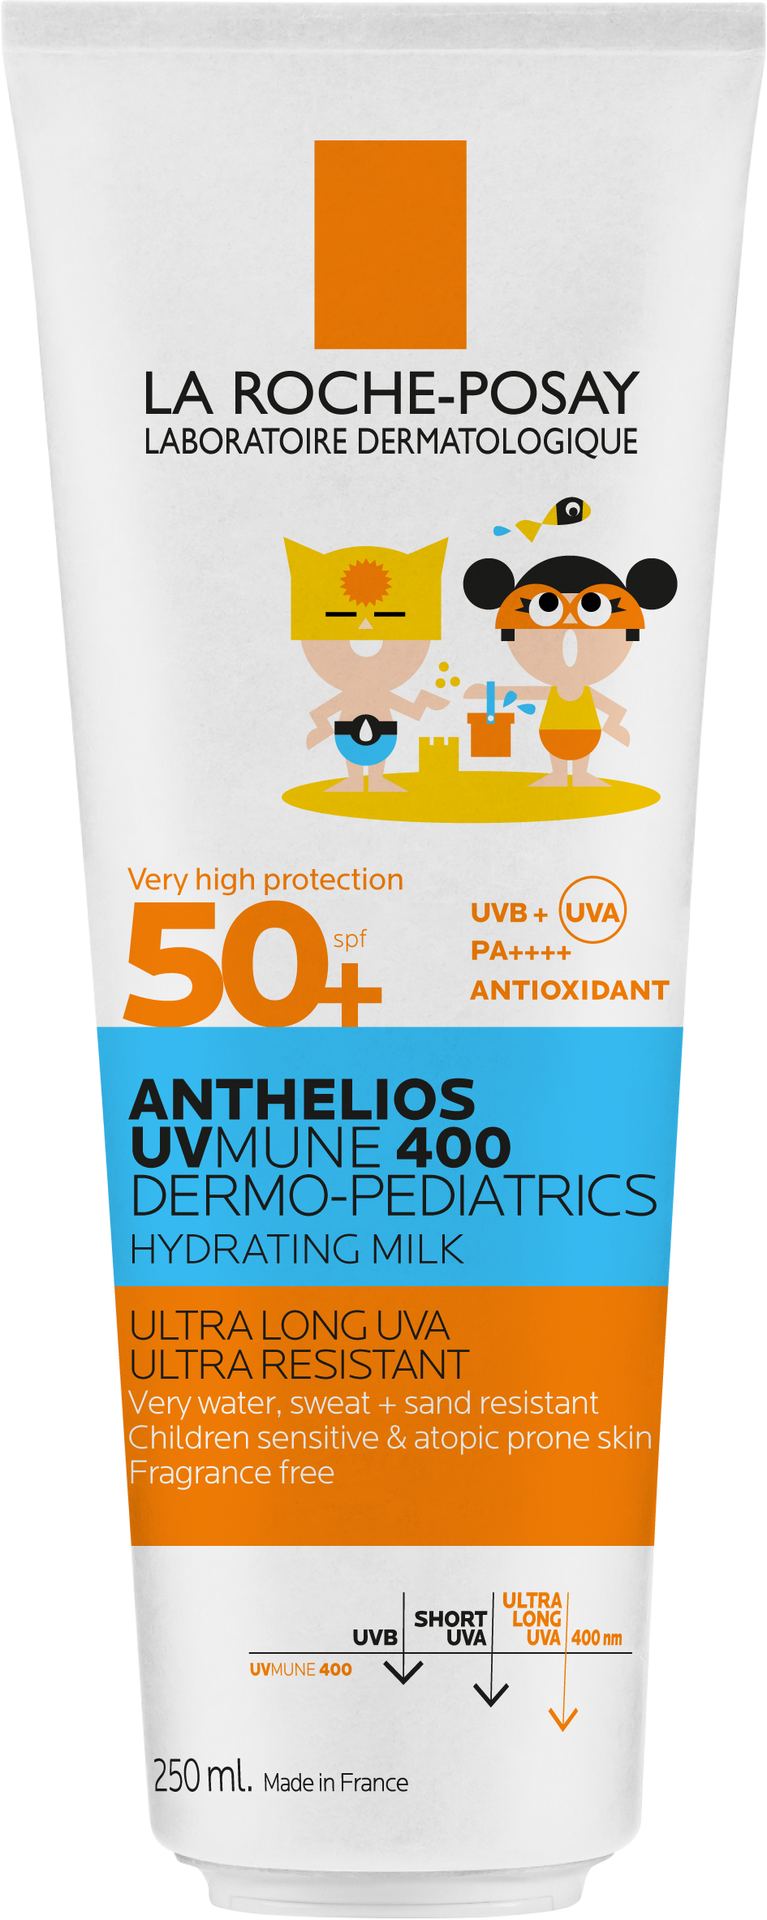 La Roche-Posay Anthelios UVMune 400 Kids Hydrating Milk SPF 50+ 250ml